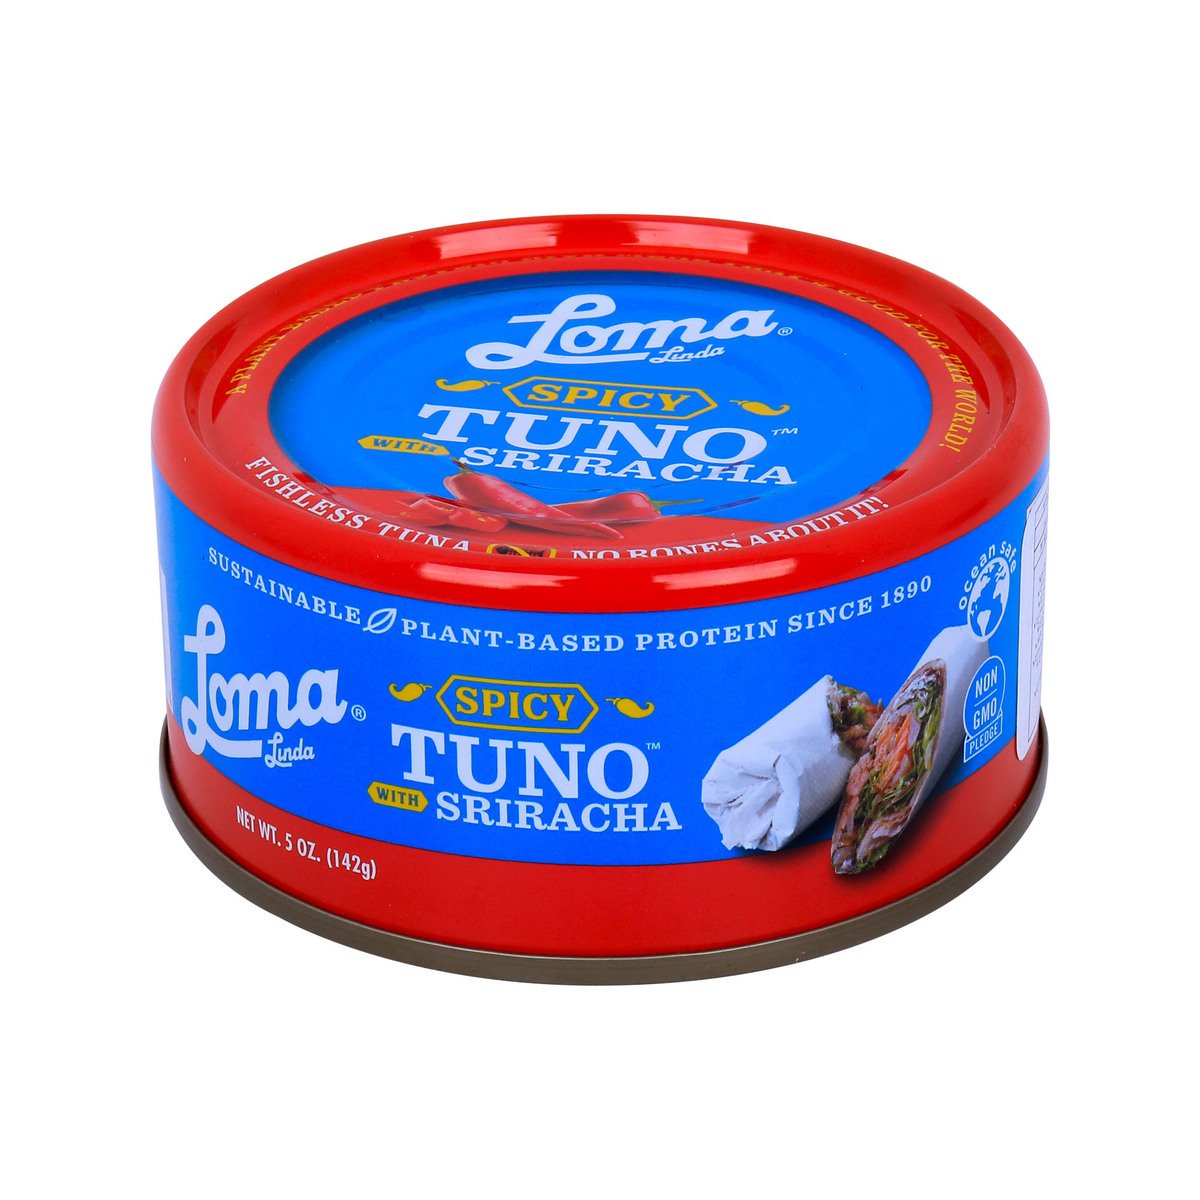 Loma Linda Plant Based Tuno With Sriracha 142 g